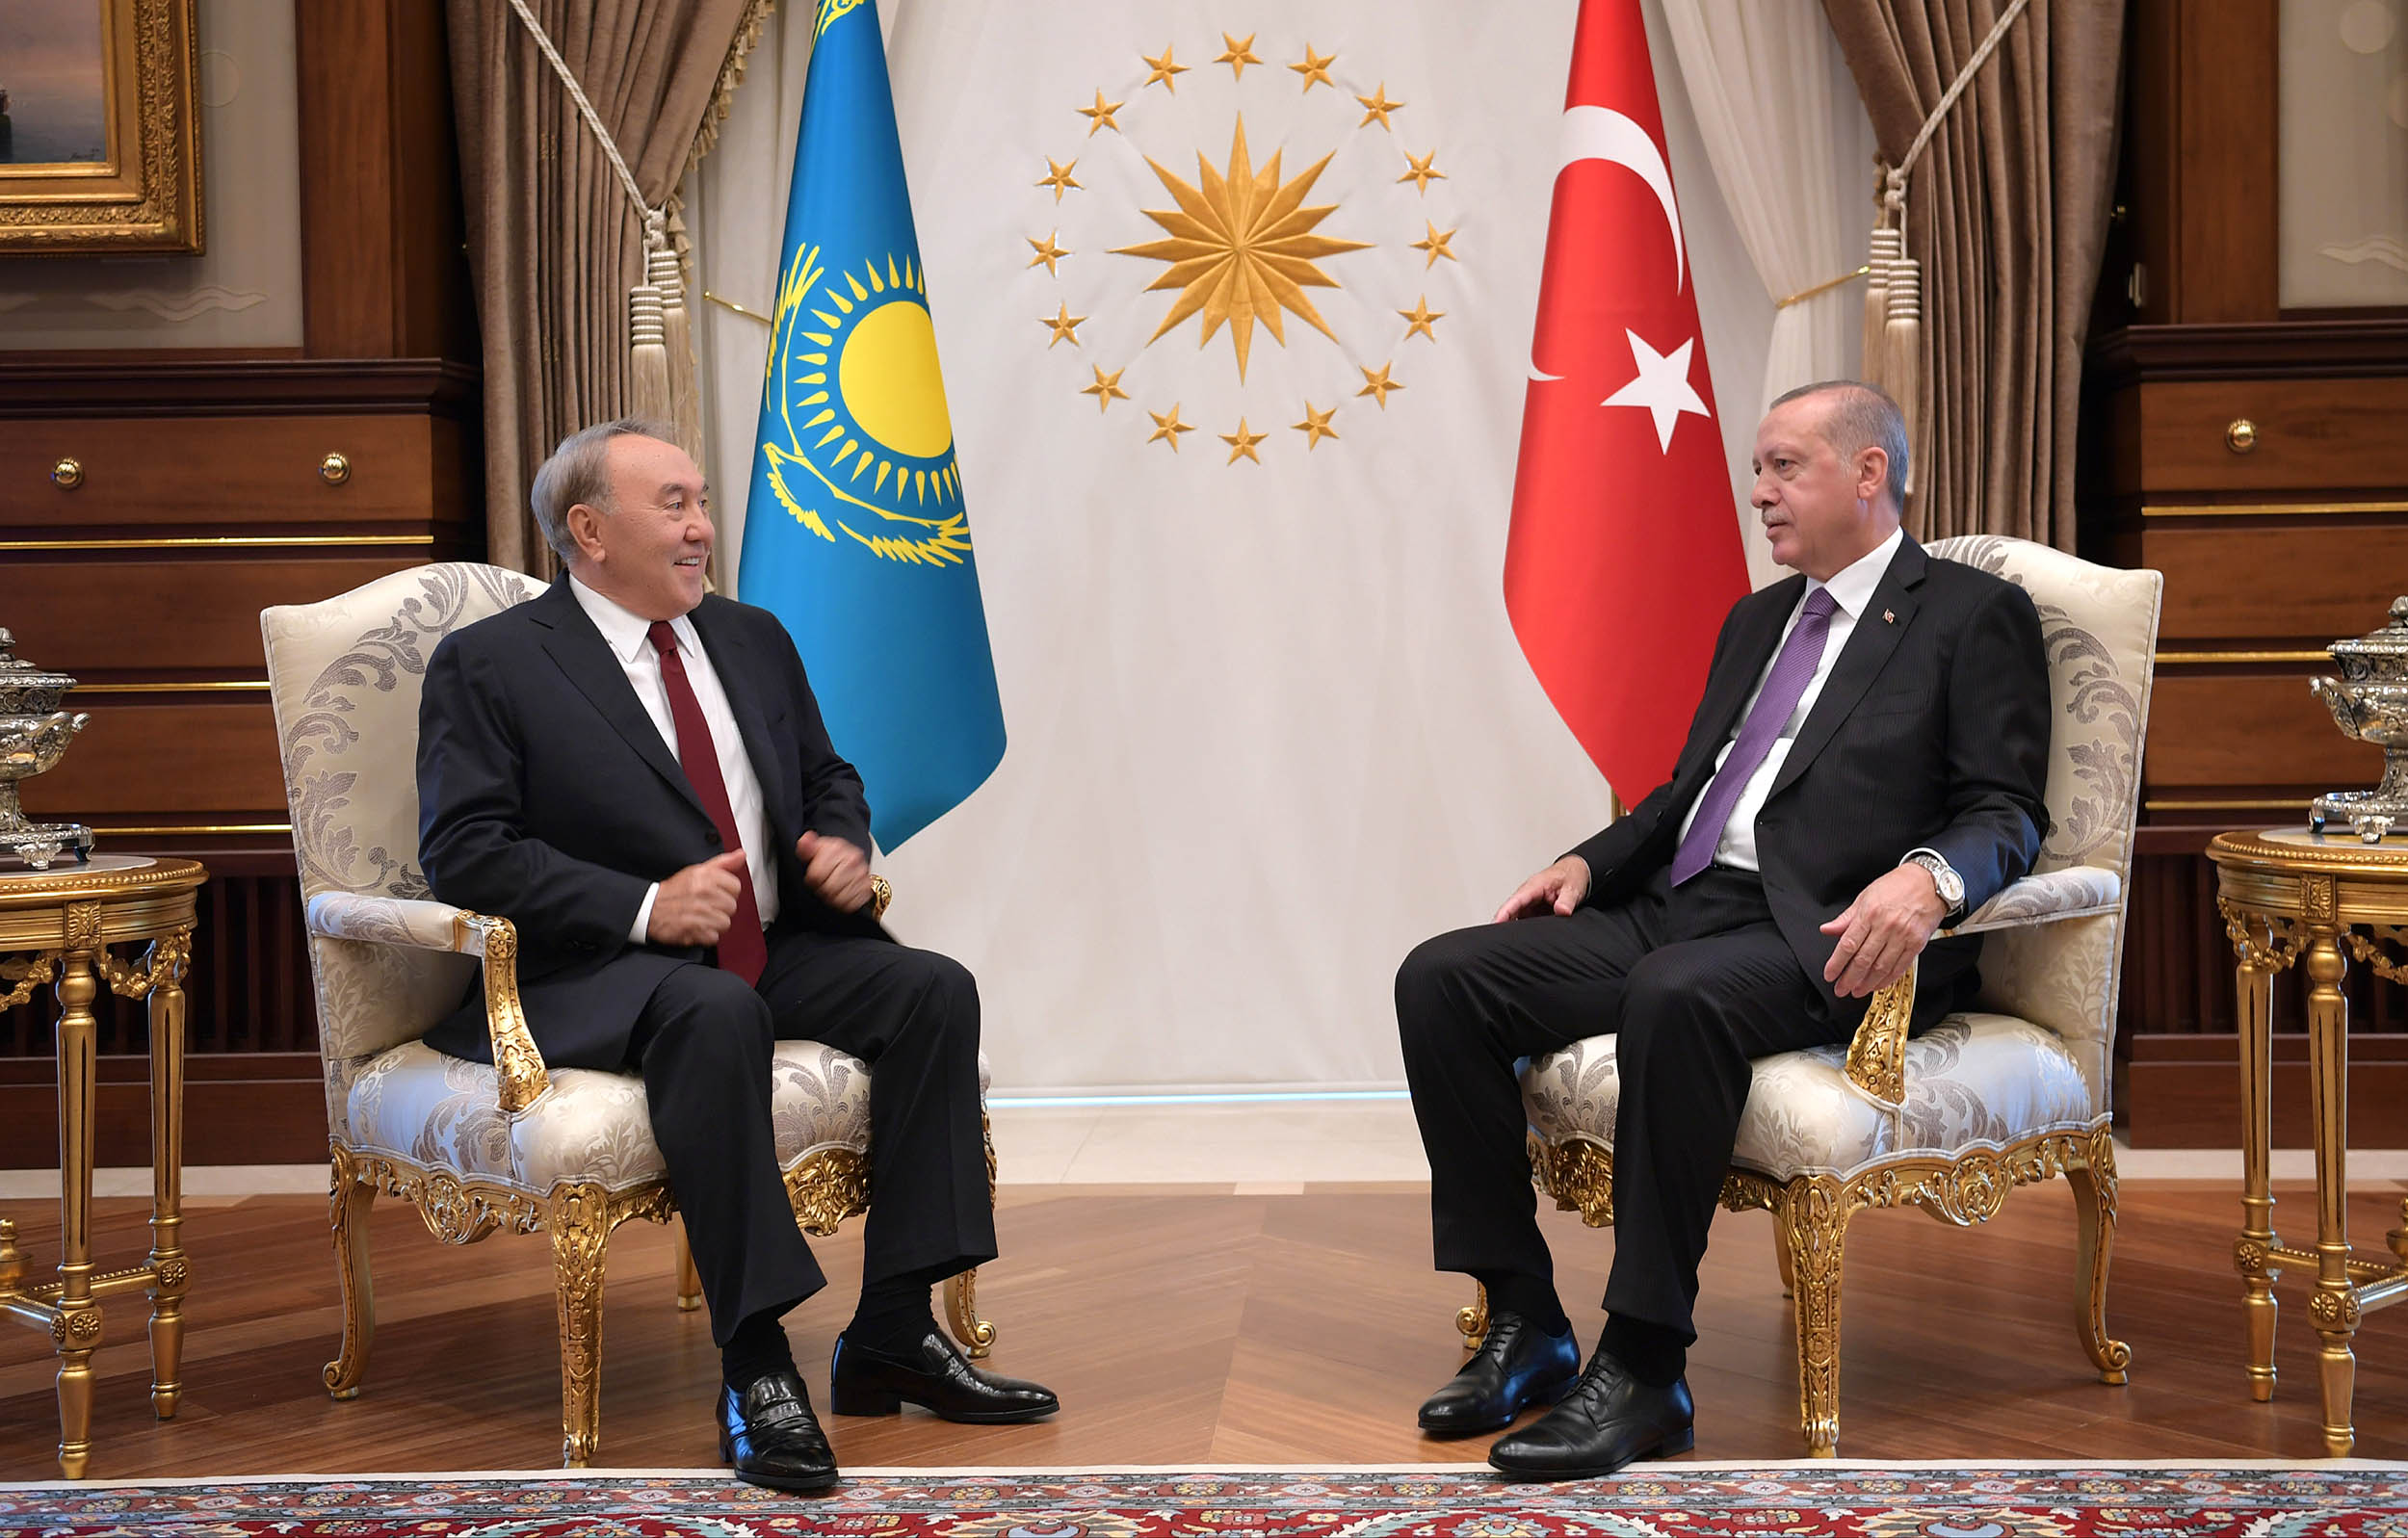 Kazakh President meets with Recep Tayyip Erdogan